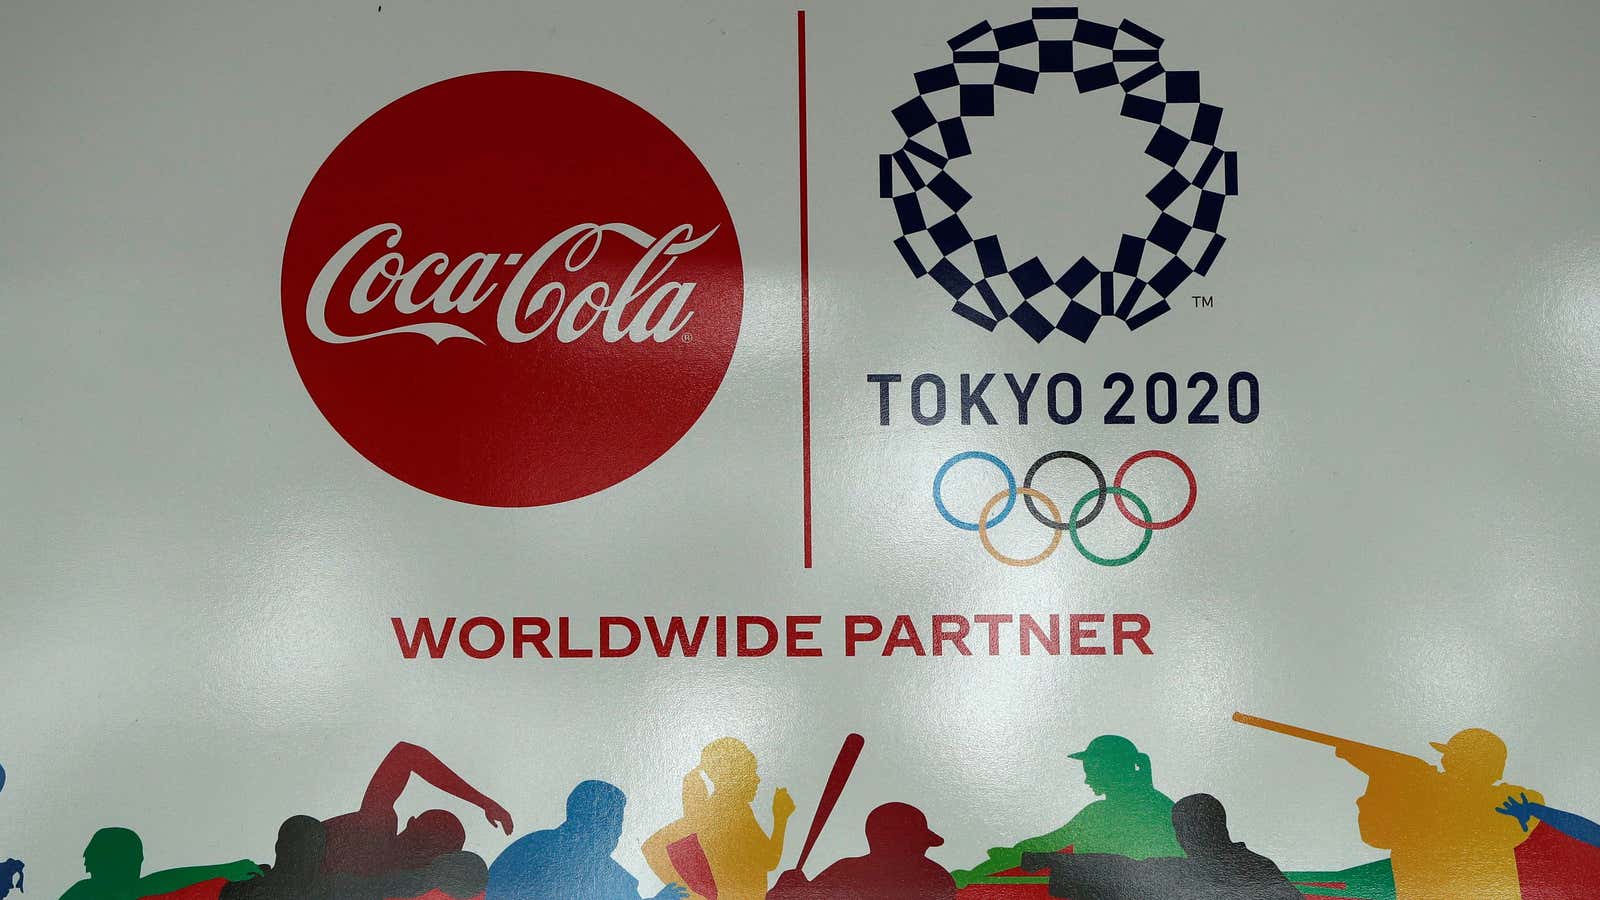 Coke is one of the Olympics’ longtime global sponsors.